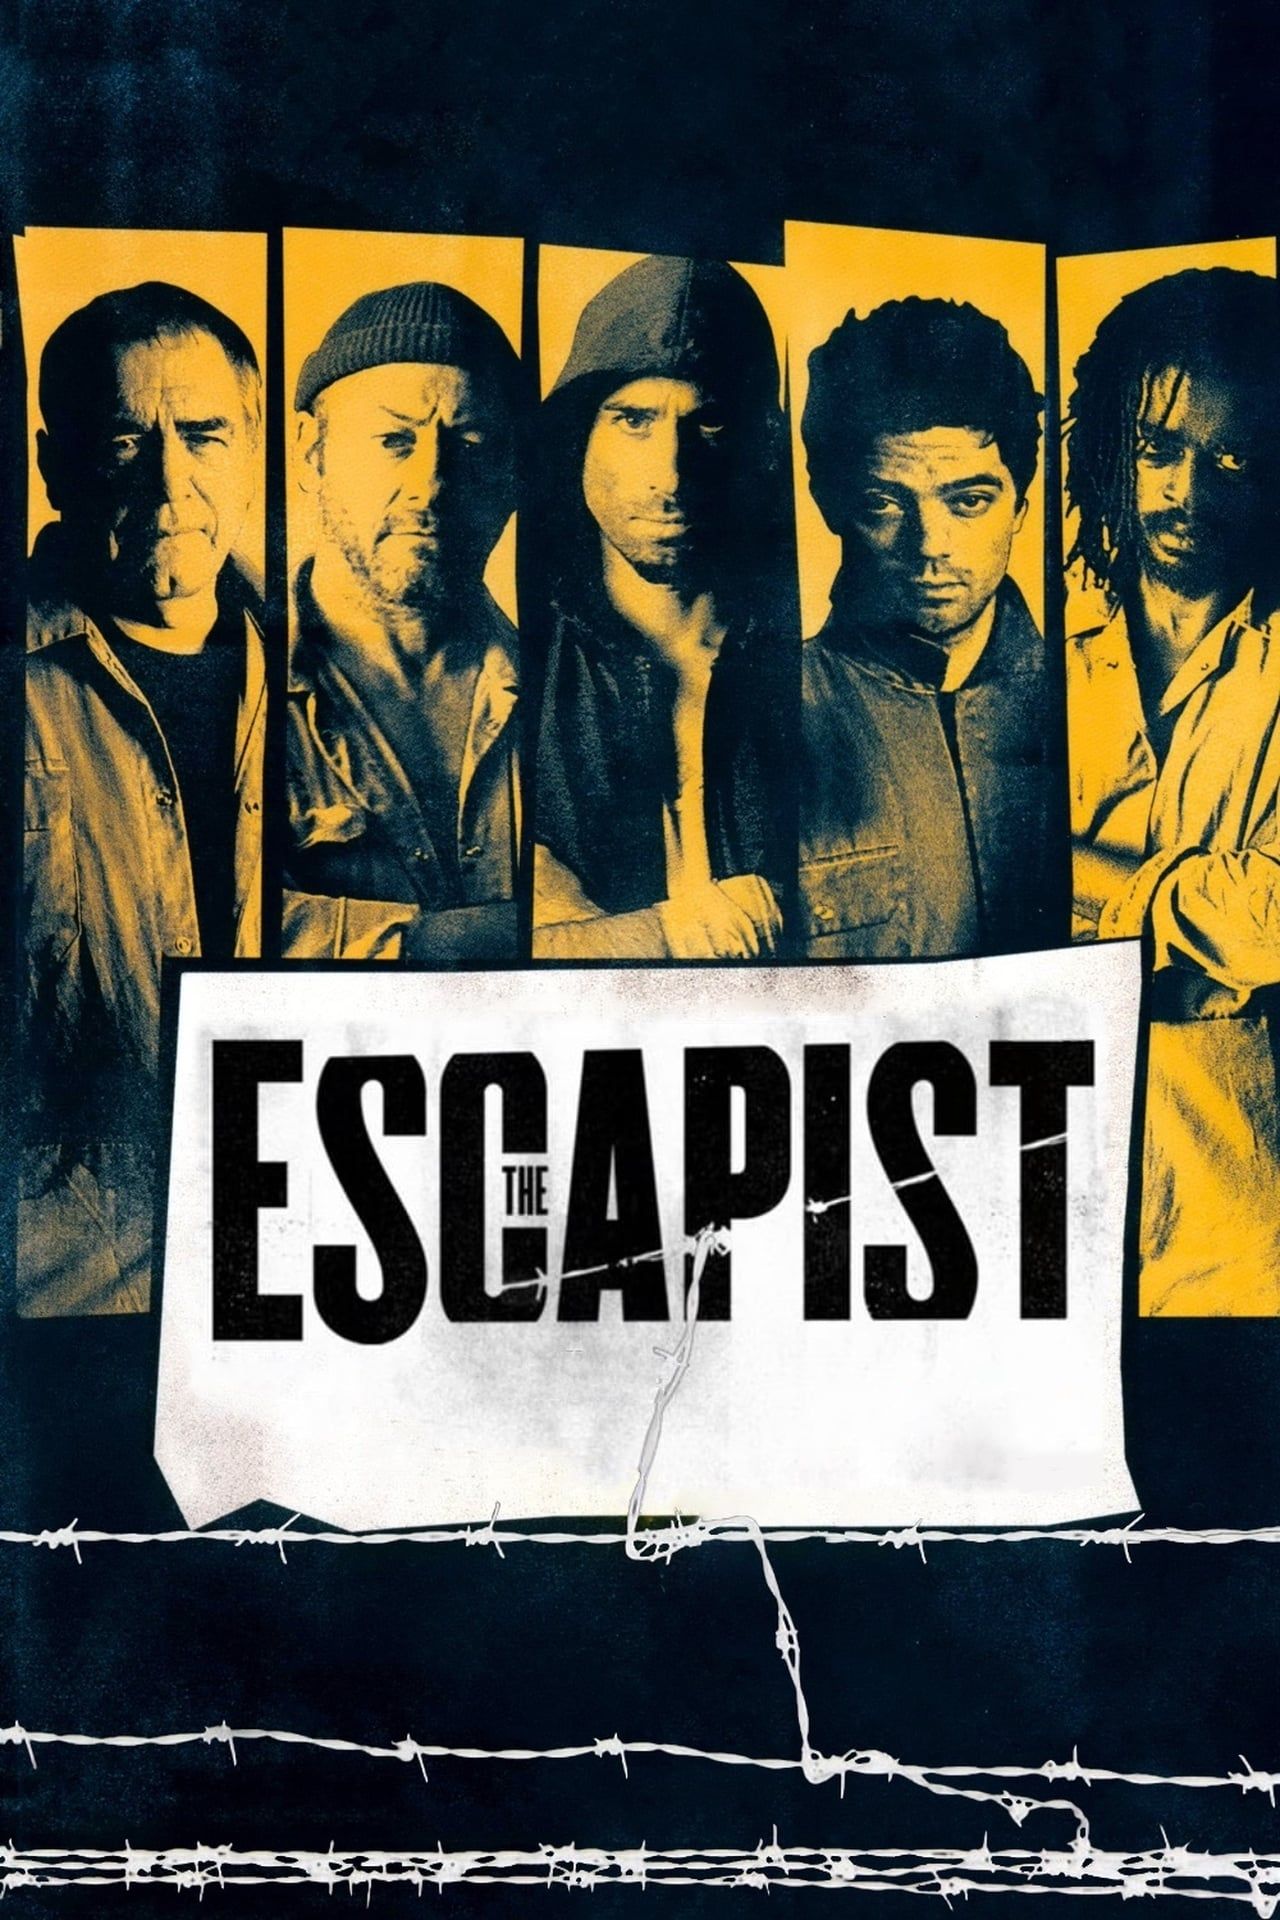 The Escapist Movie Poster Showing Brian Cox, Joseph Fiennes, Seu Jorge, Liam Cunningham, and Dominic Cooper